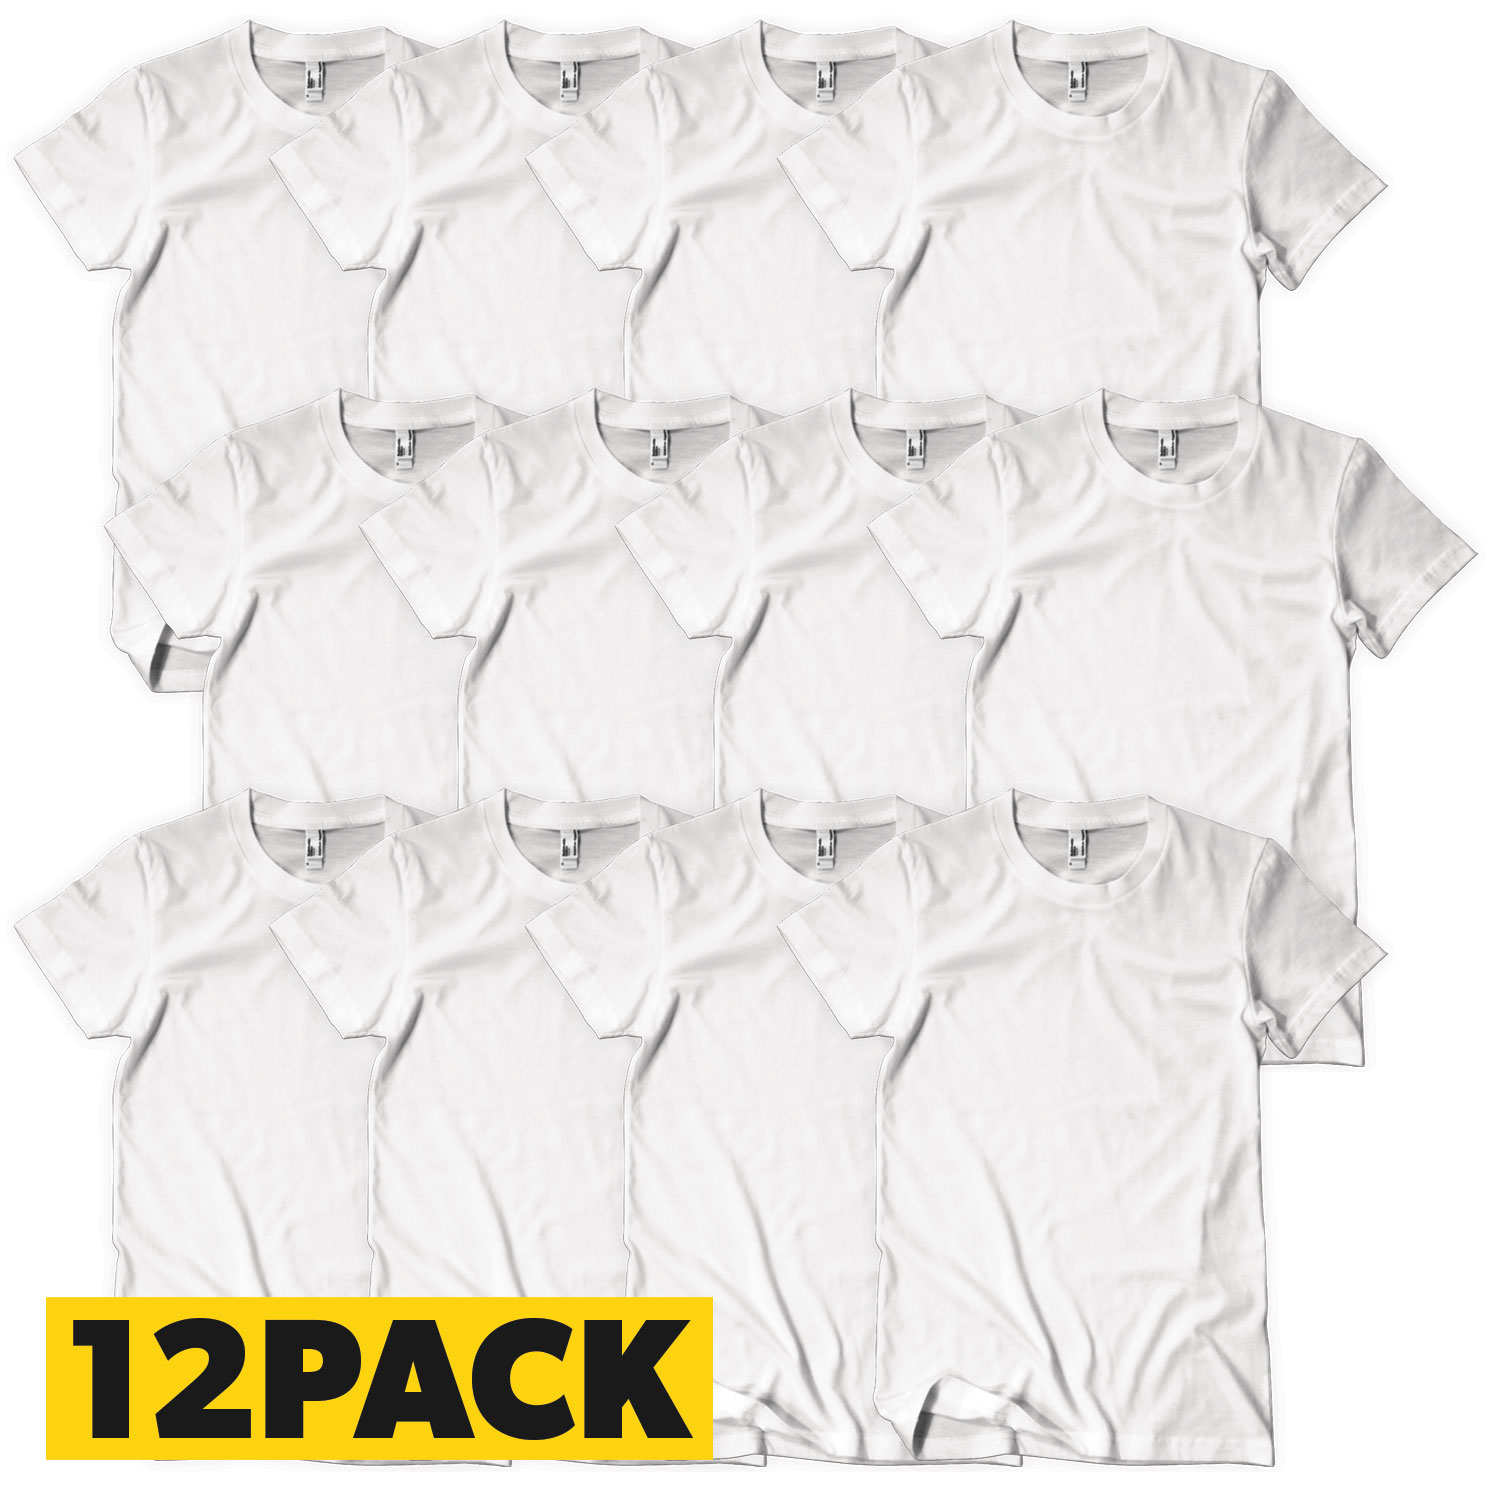 T-Shirts Bigpack White - 12 pack